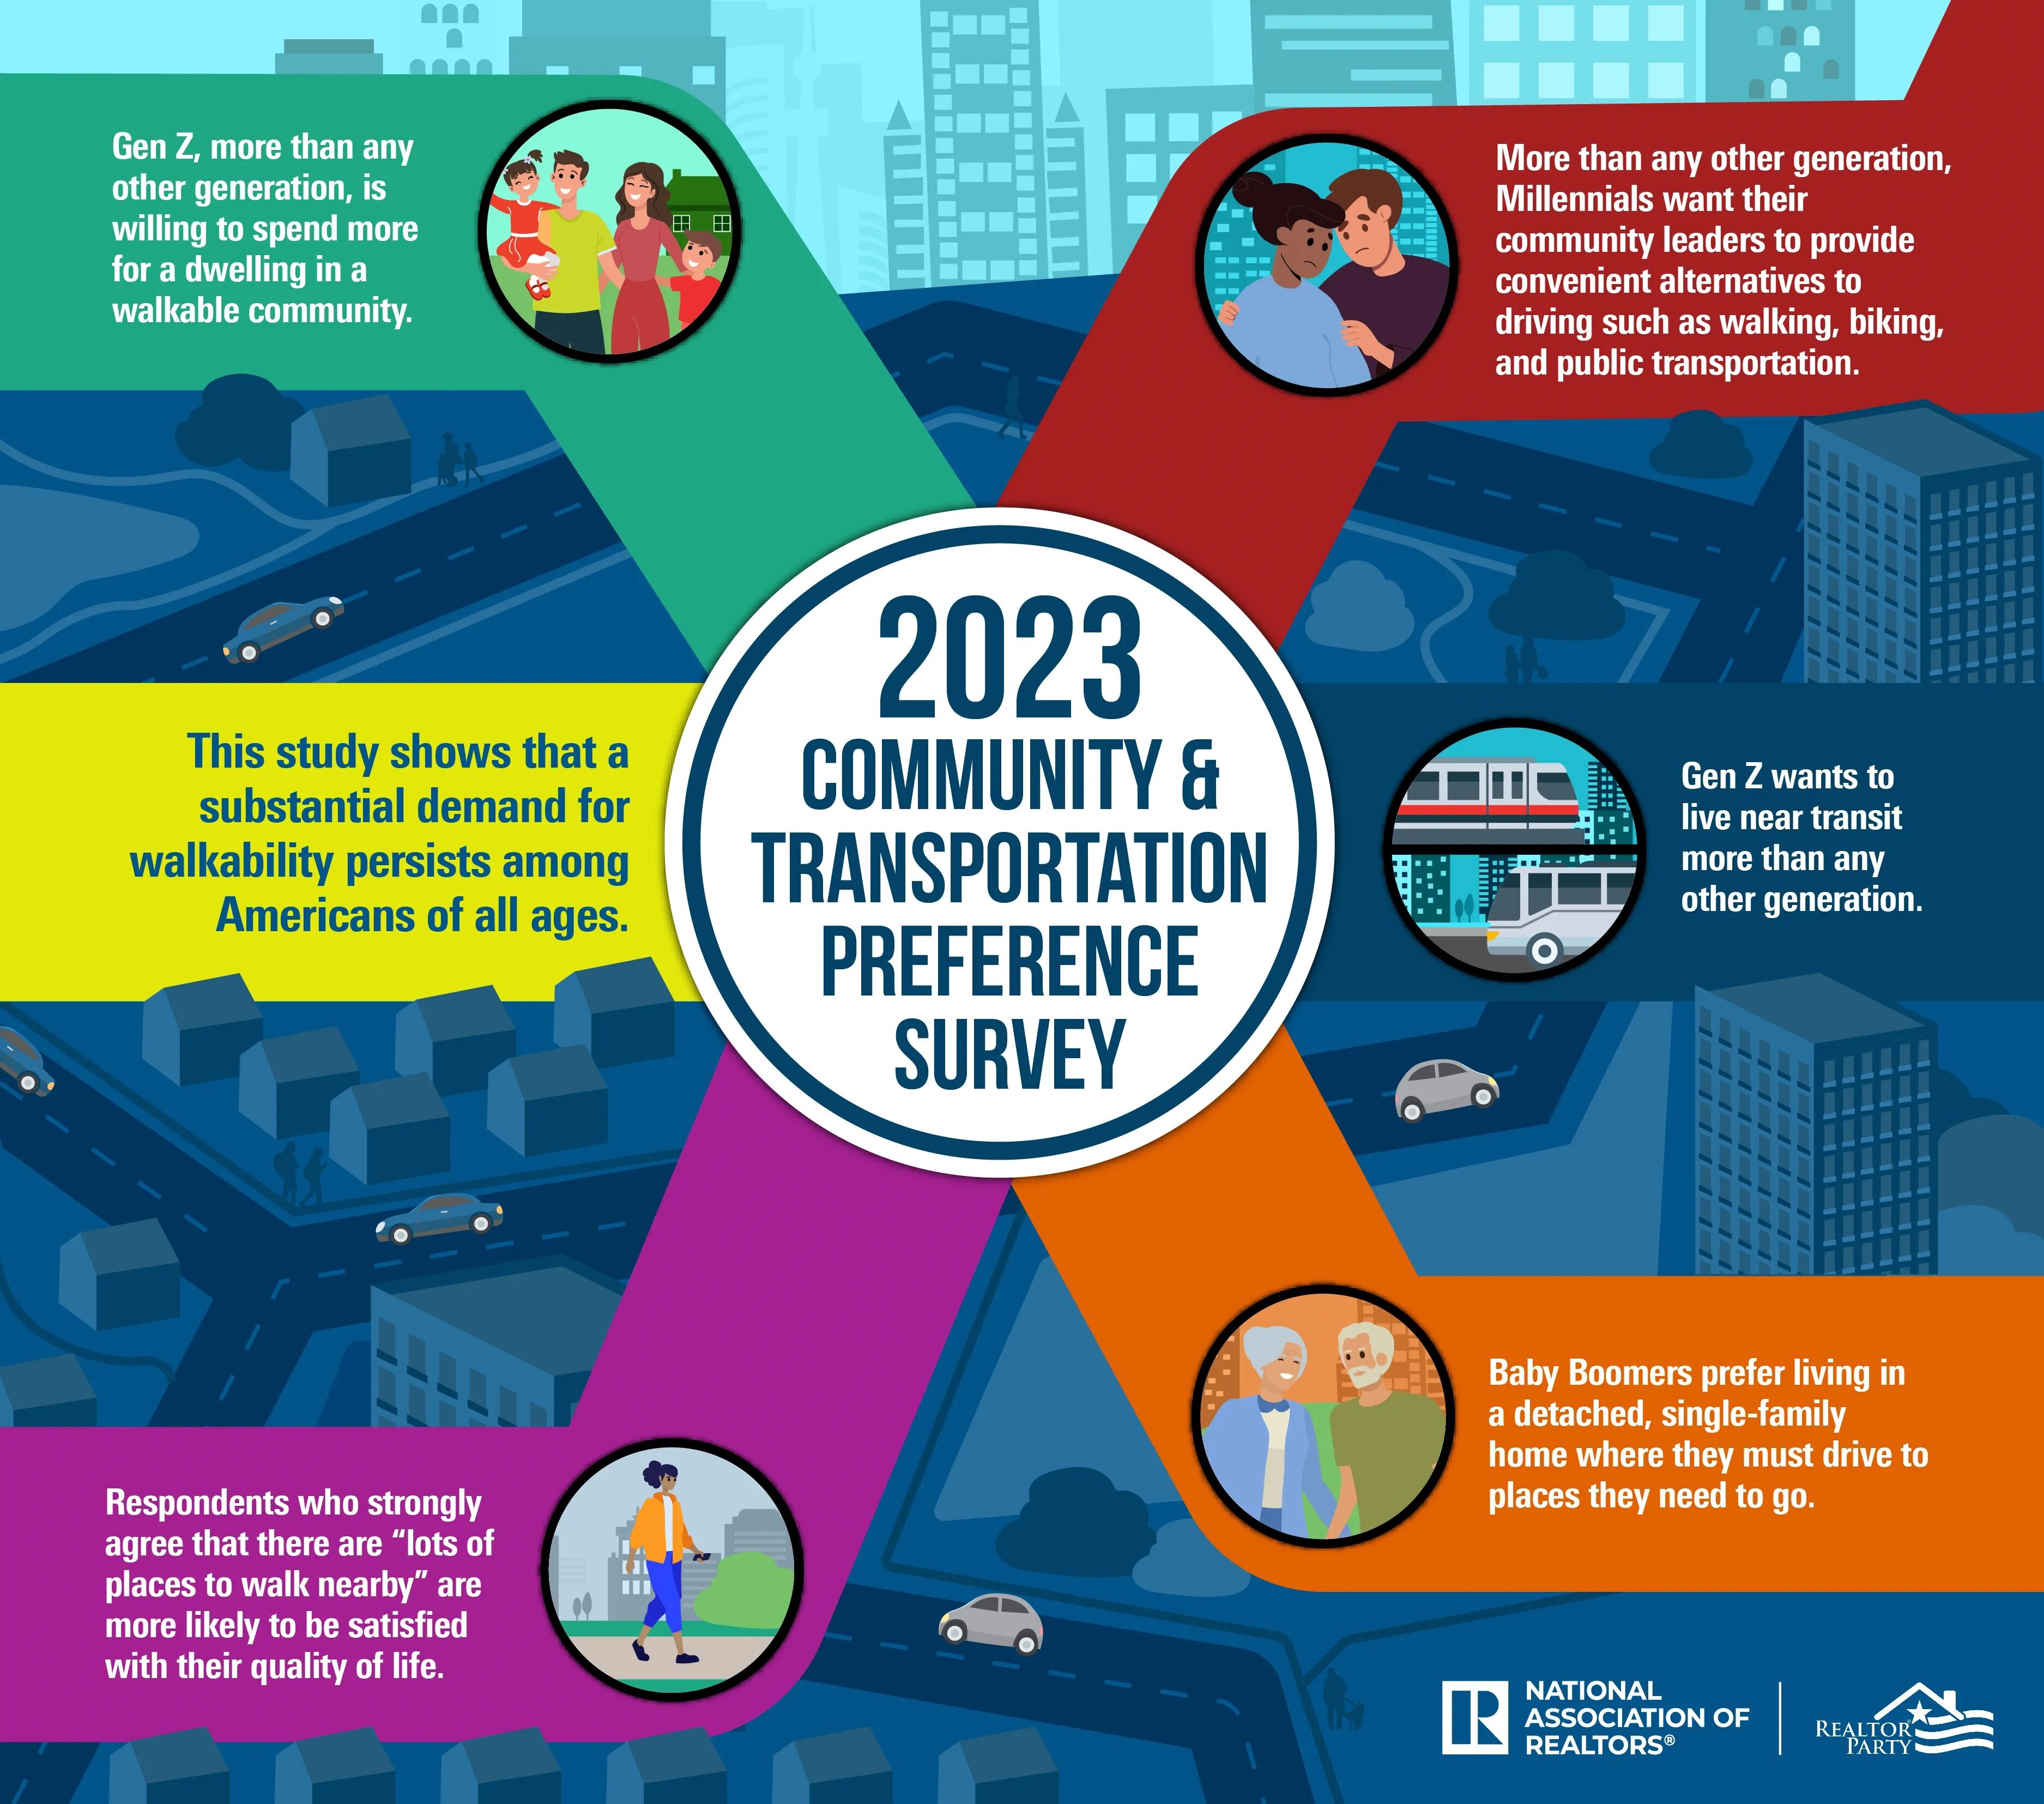 https://www.worldpropertyjournal.com/news-assets-2/2023-community-transportation-preference-survey-NAR.jpg